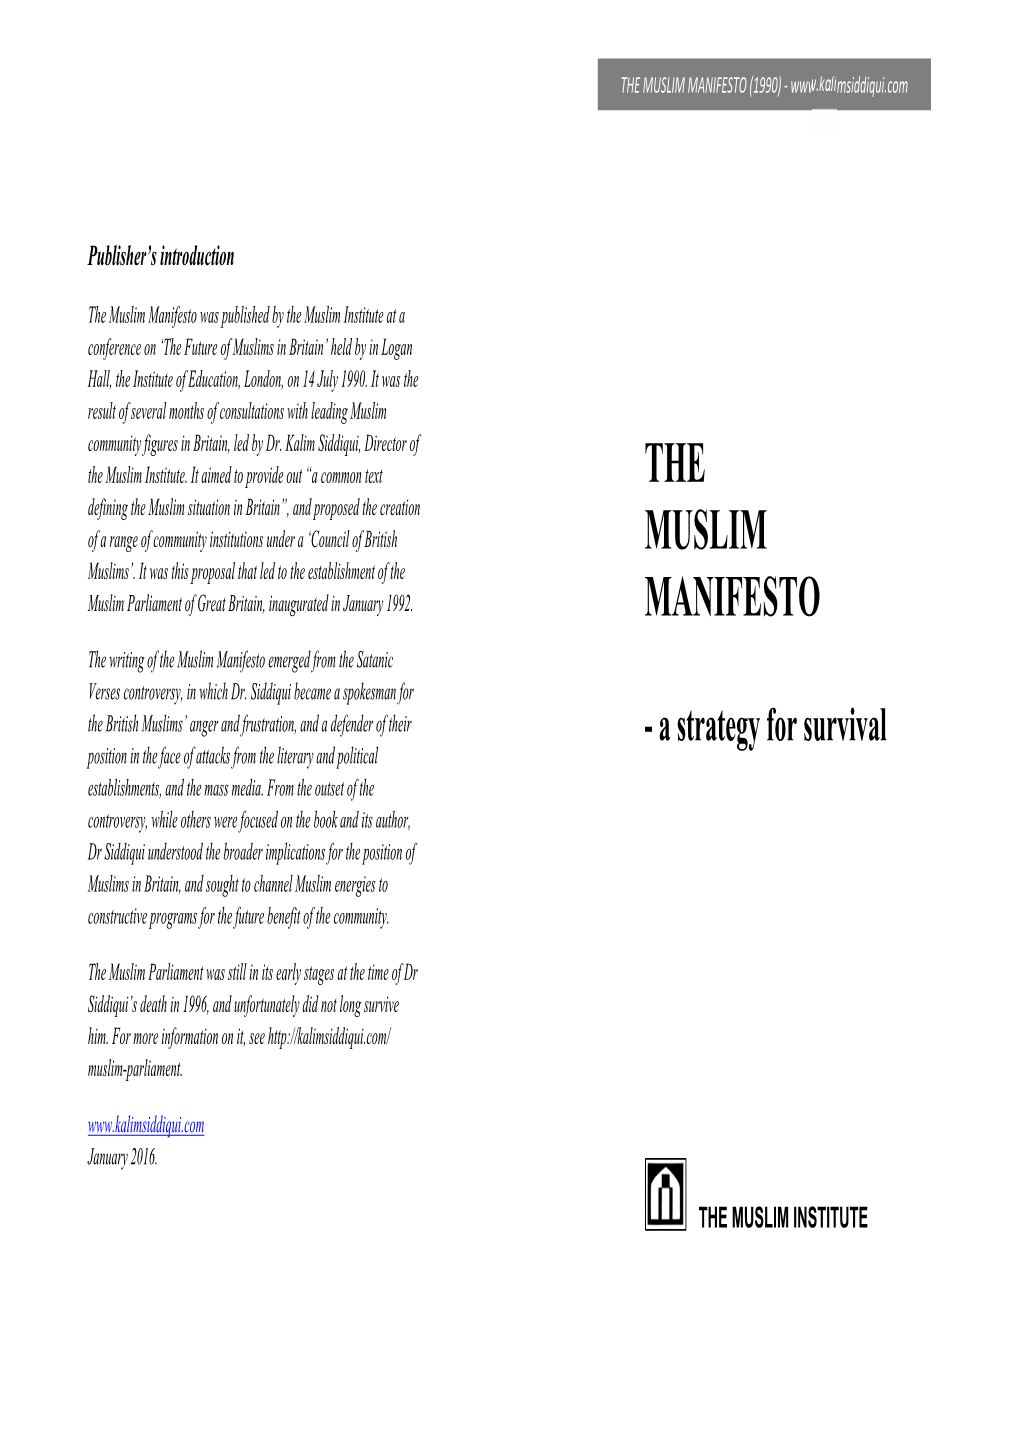 The Muslim Manifesto (1990)